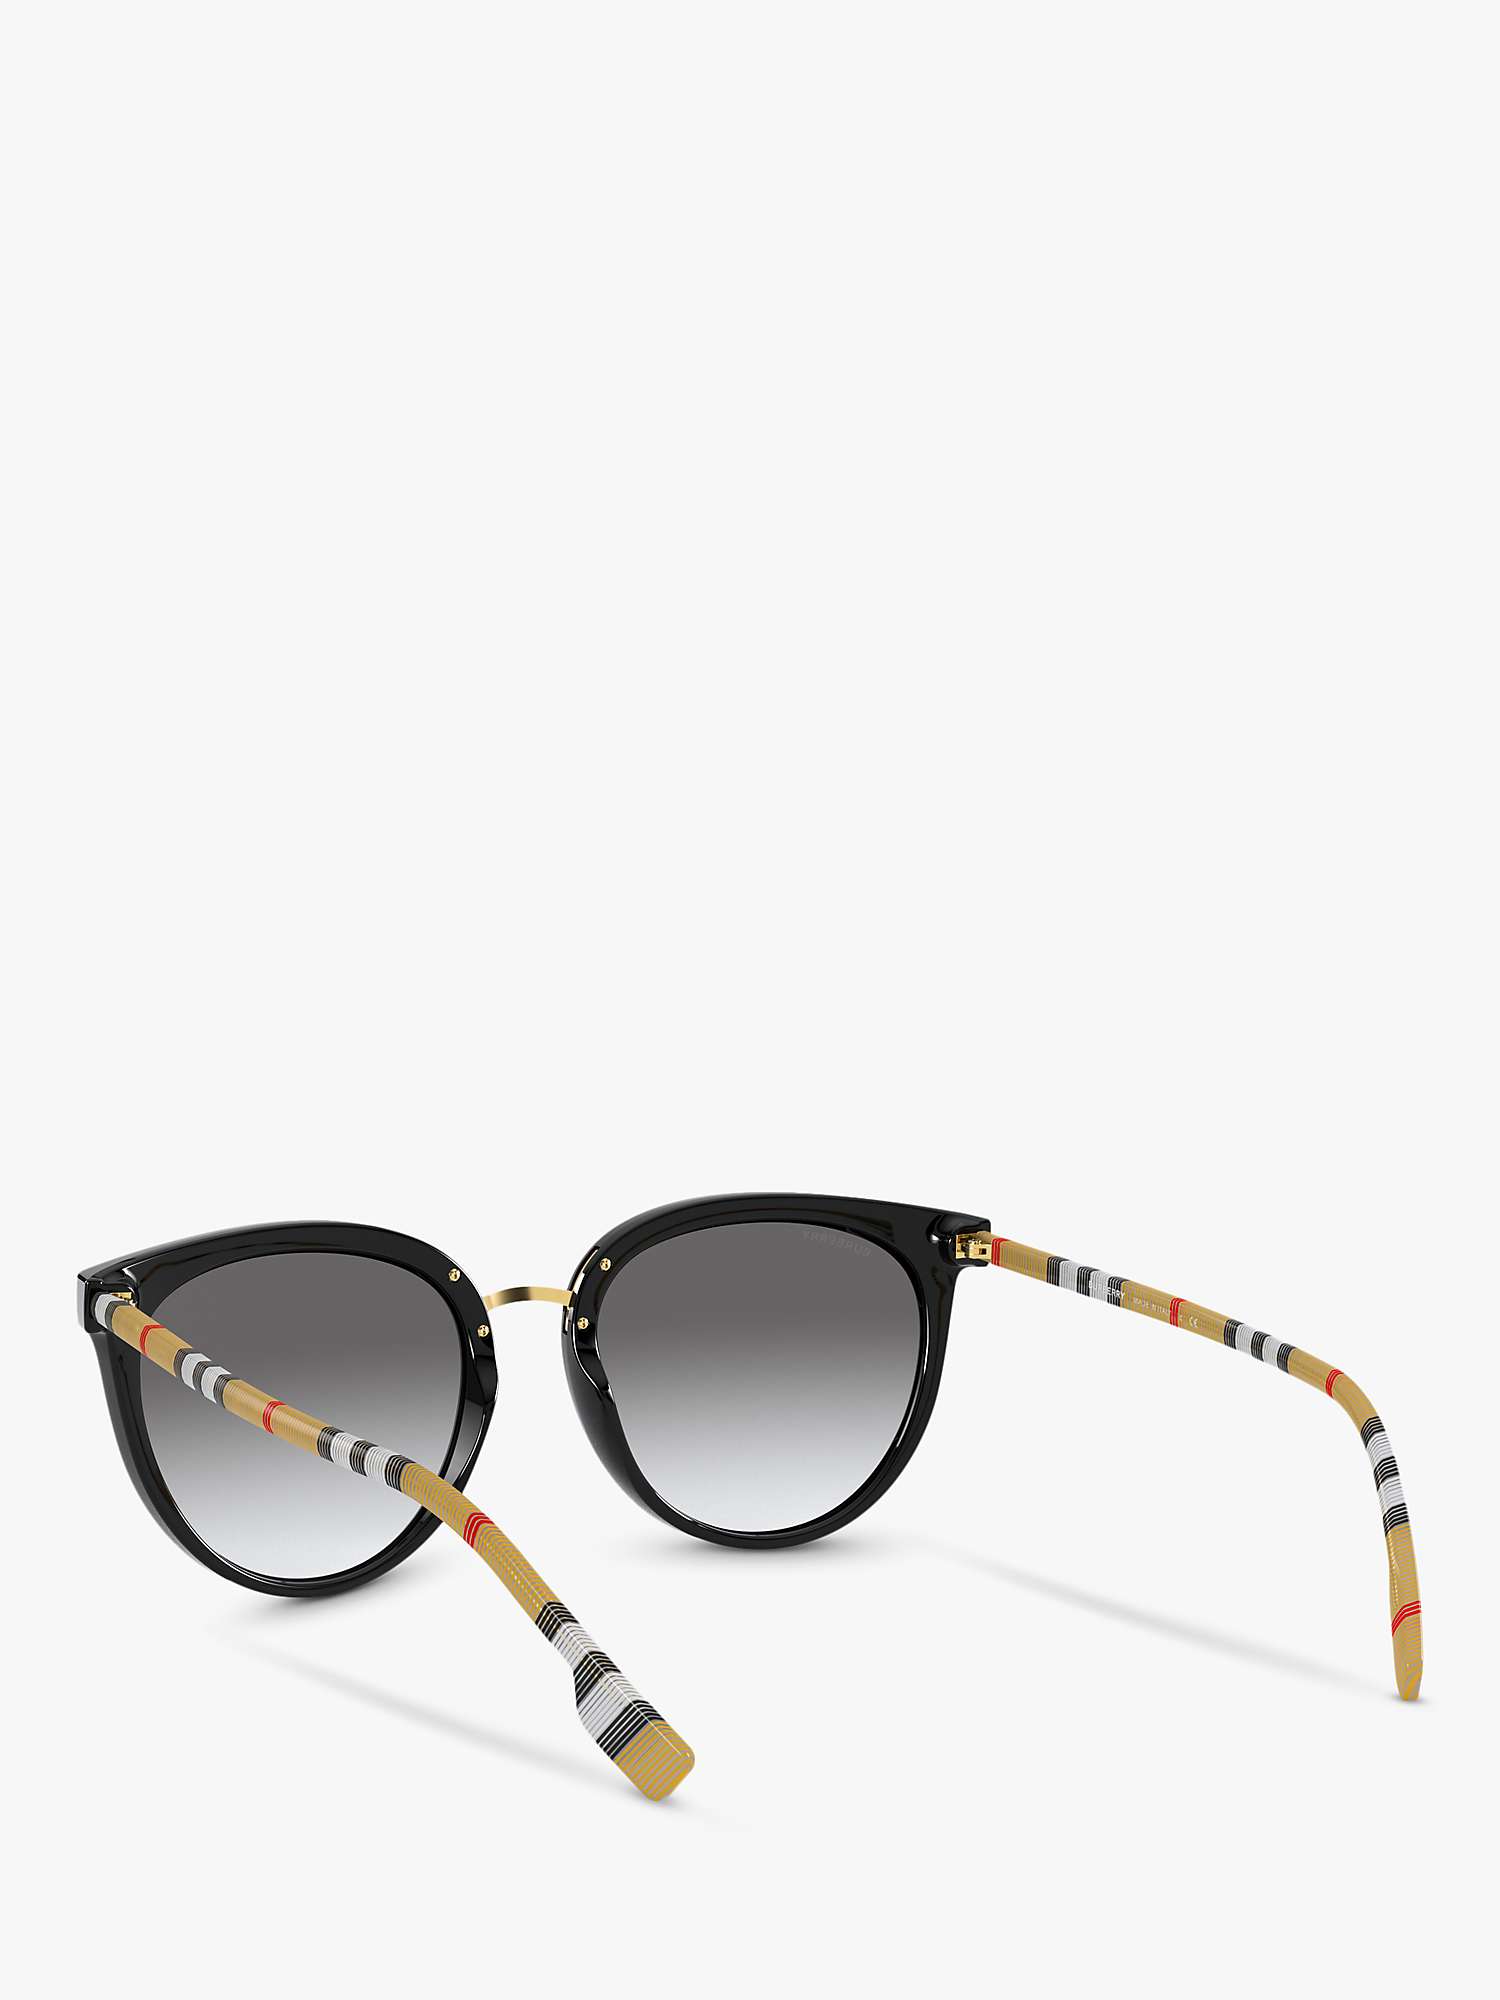 Buy Burberry BE4316 Women's Oval Sunglasses, Black/Grey Gradient Online at johnlewis.com